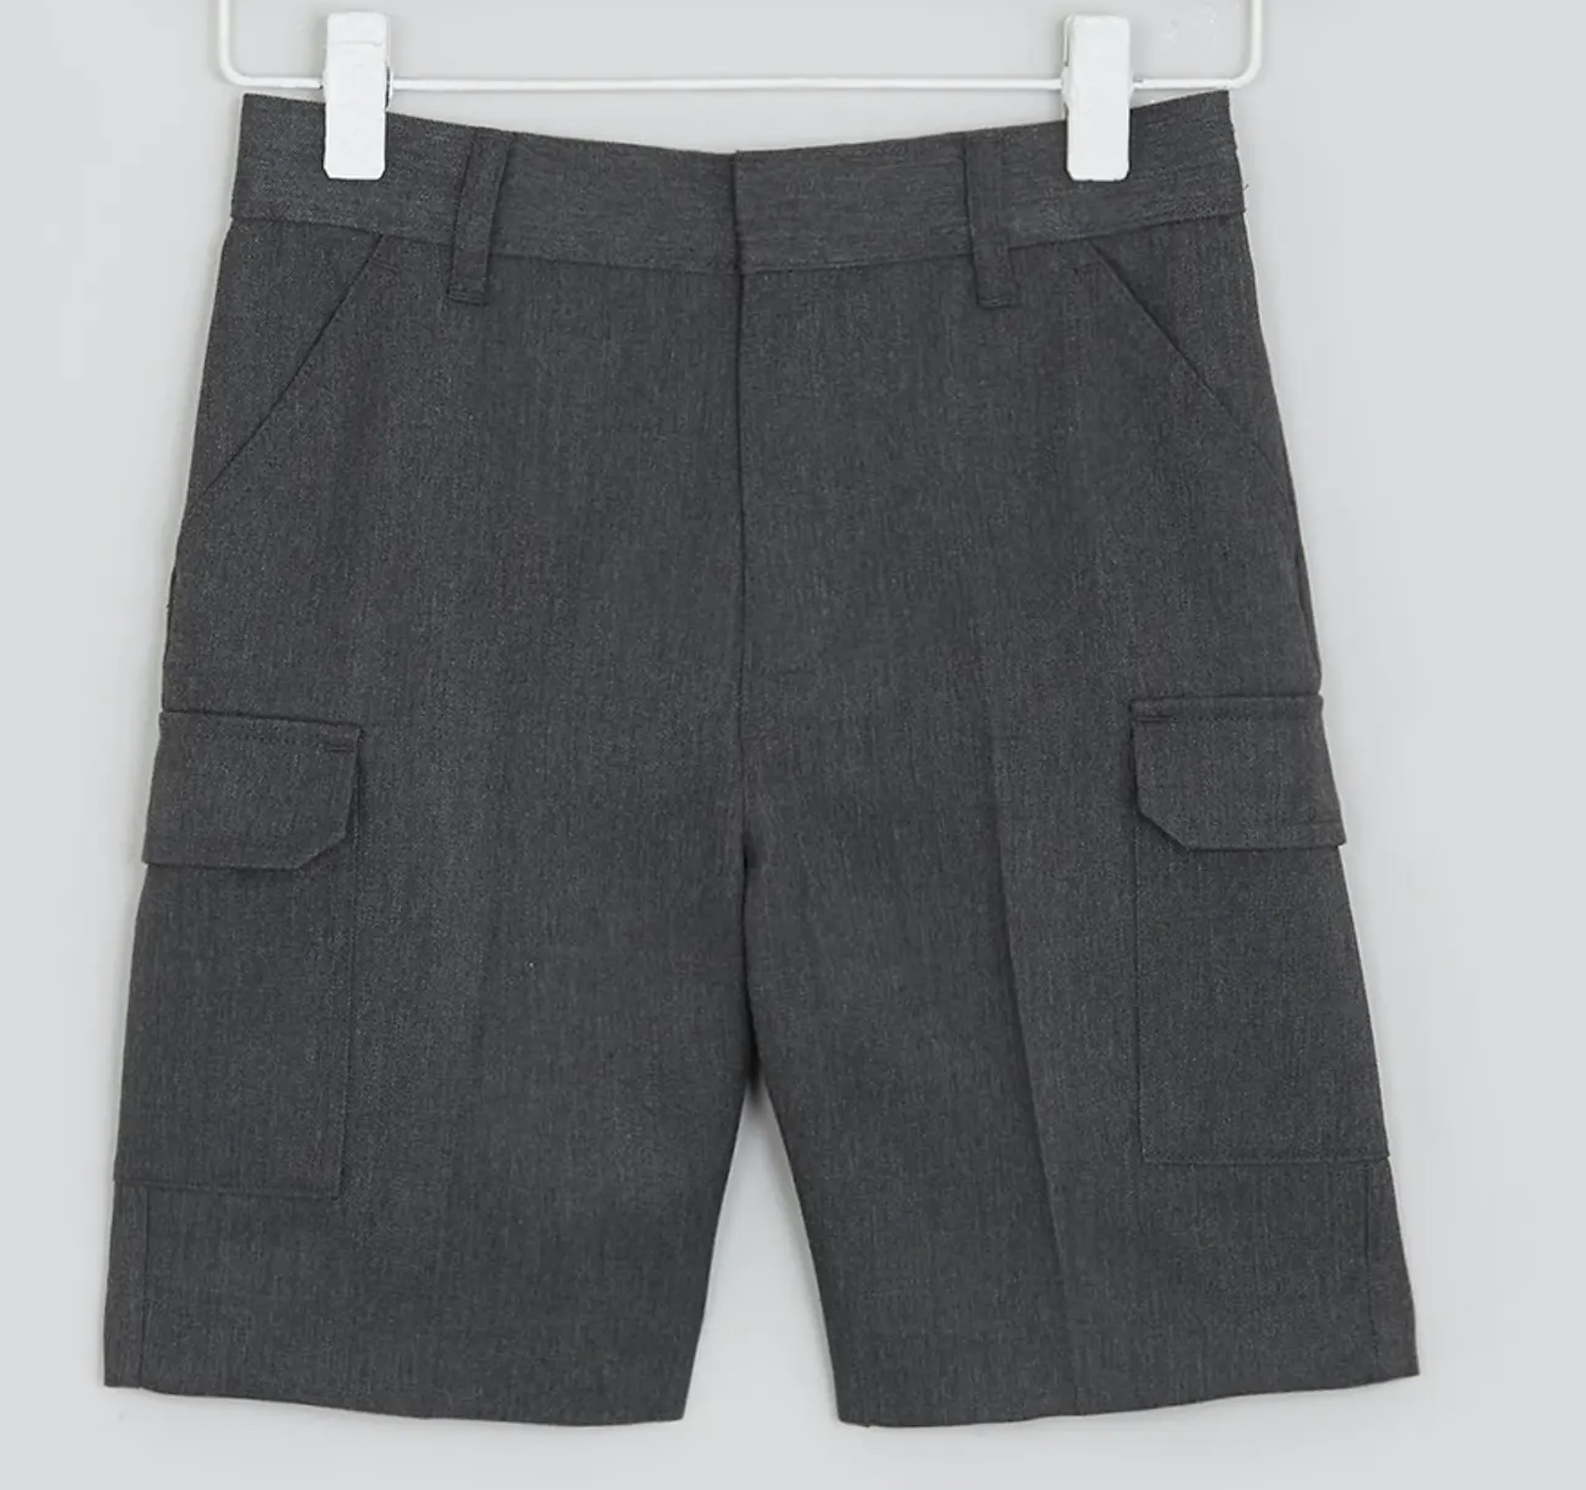 NEW Two Pairs Boys' Dark Grey Cargo shorts, Flat Front, Adjustable Waist, 3-4 Y